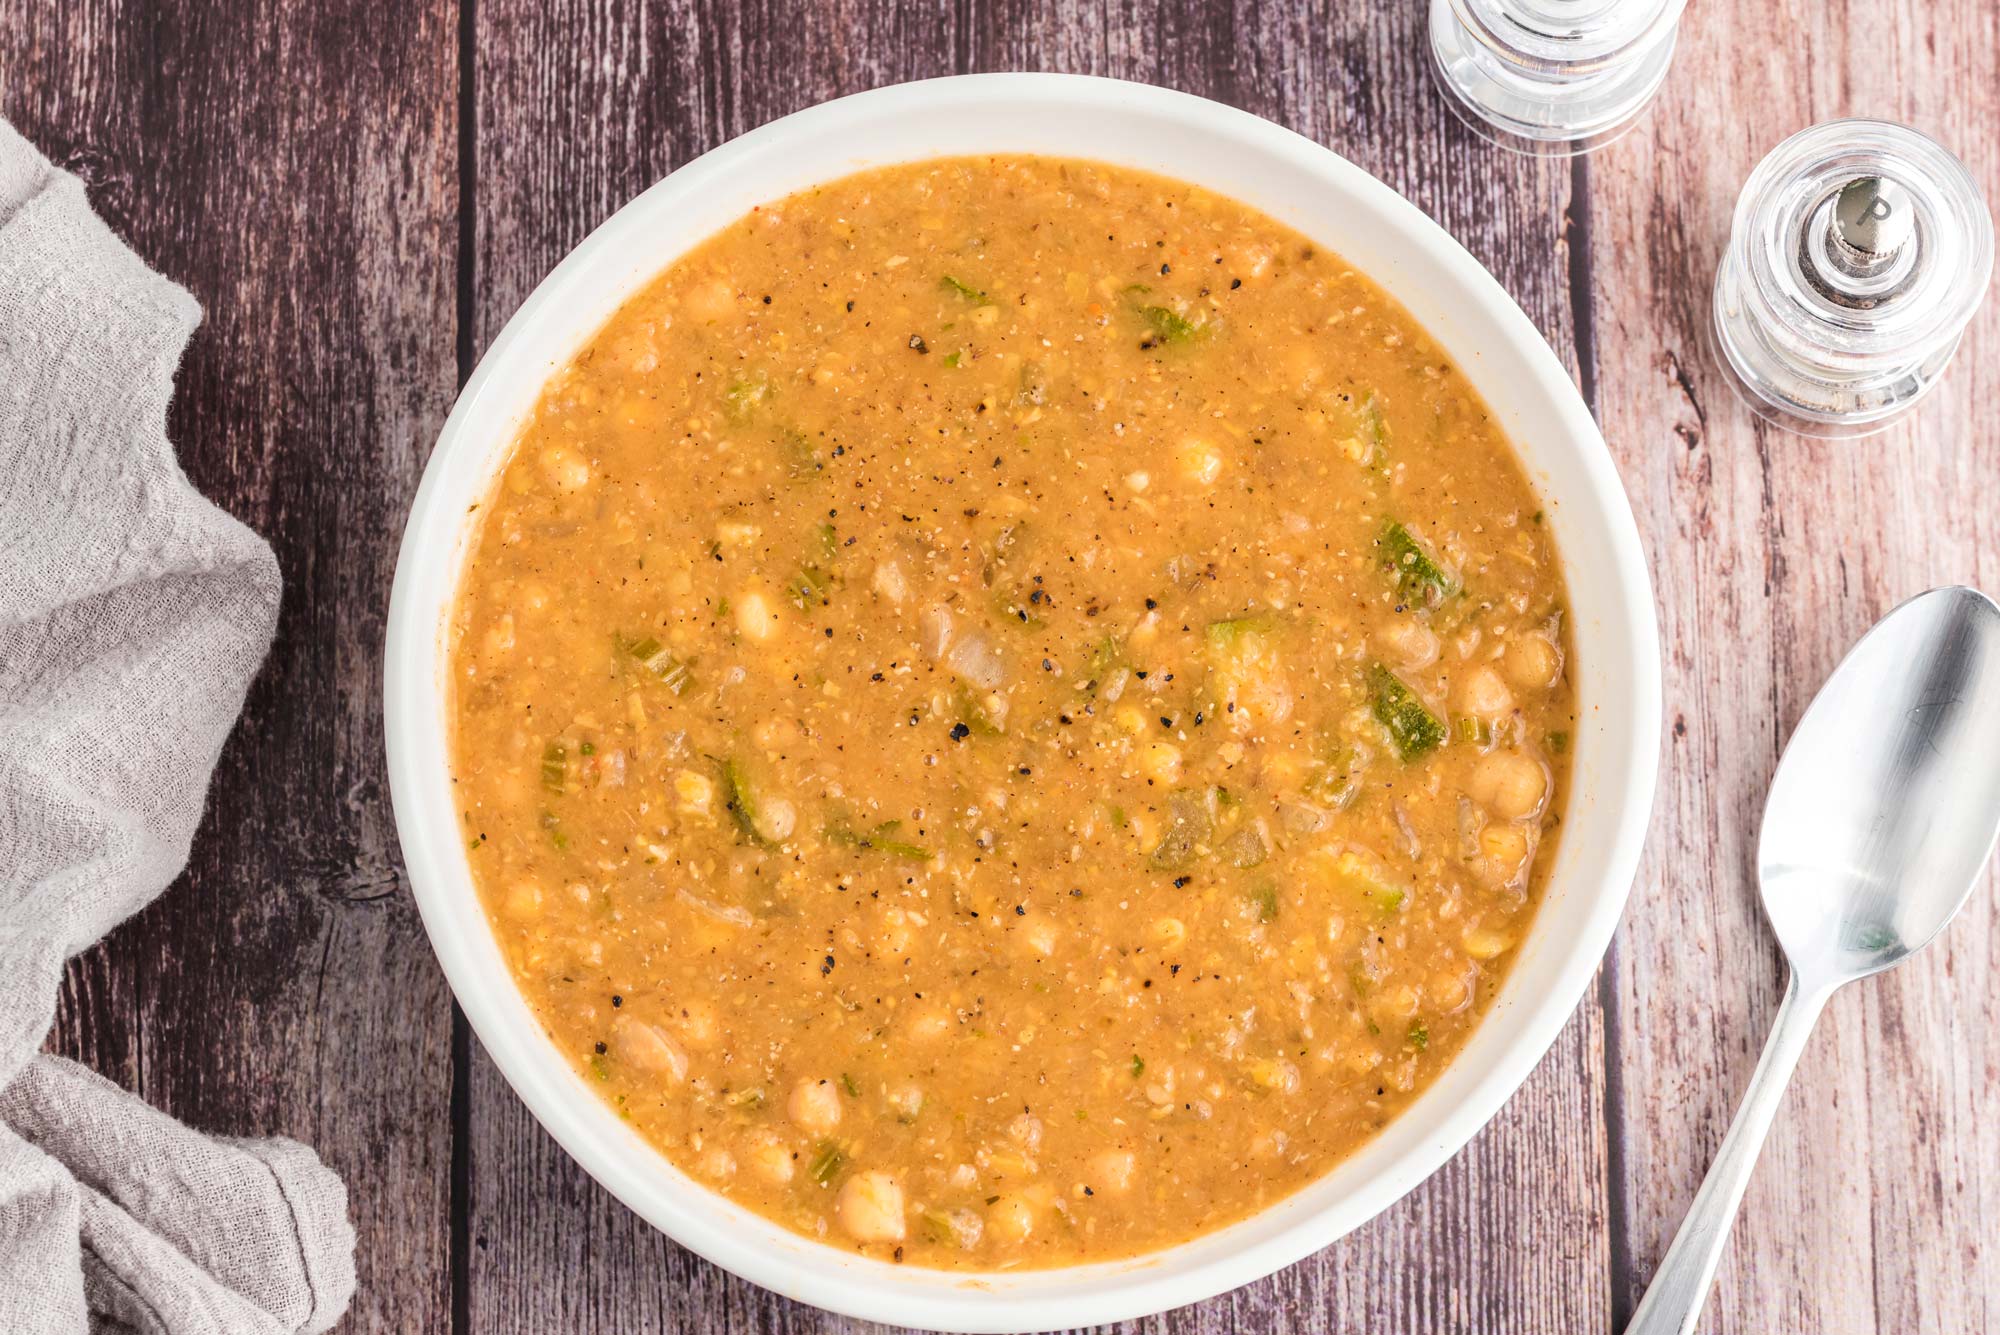 Lemony chickpea lentil soup - a healthy, budget-friendly meal